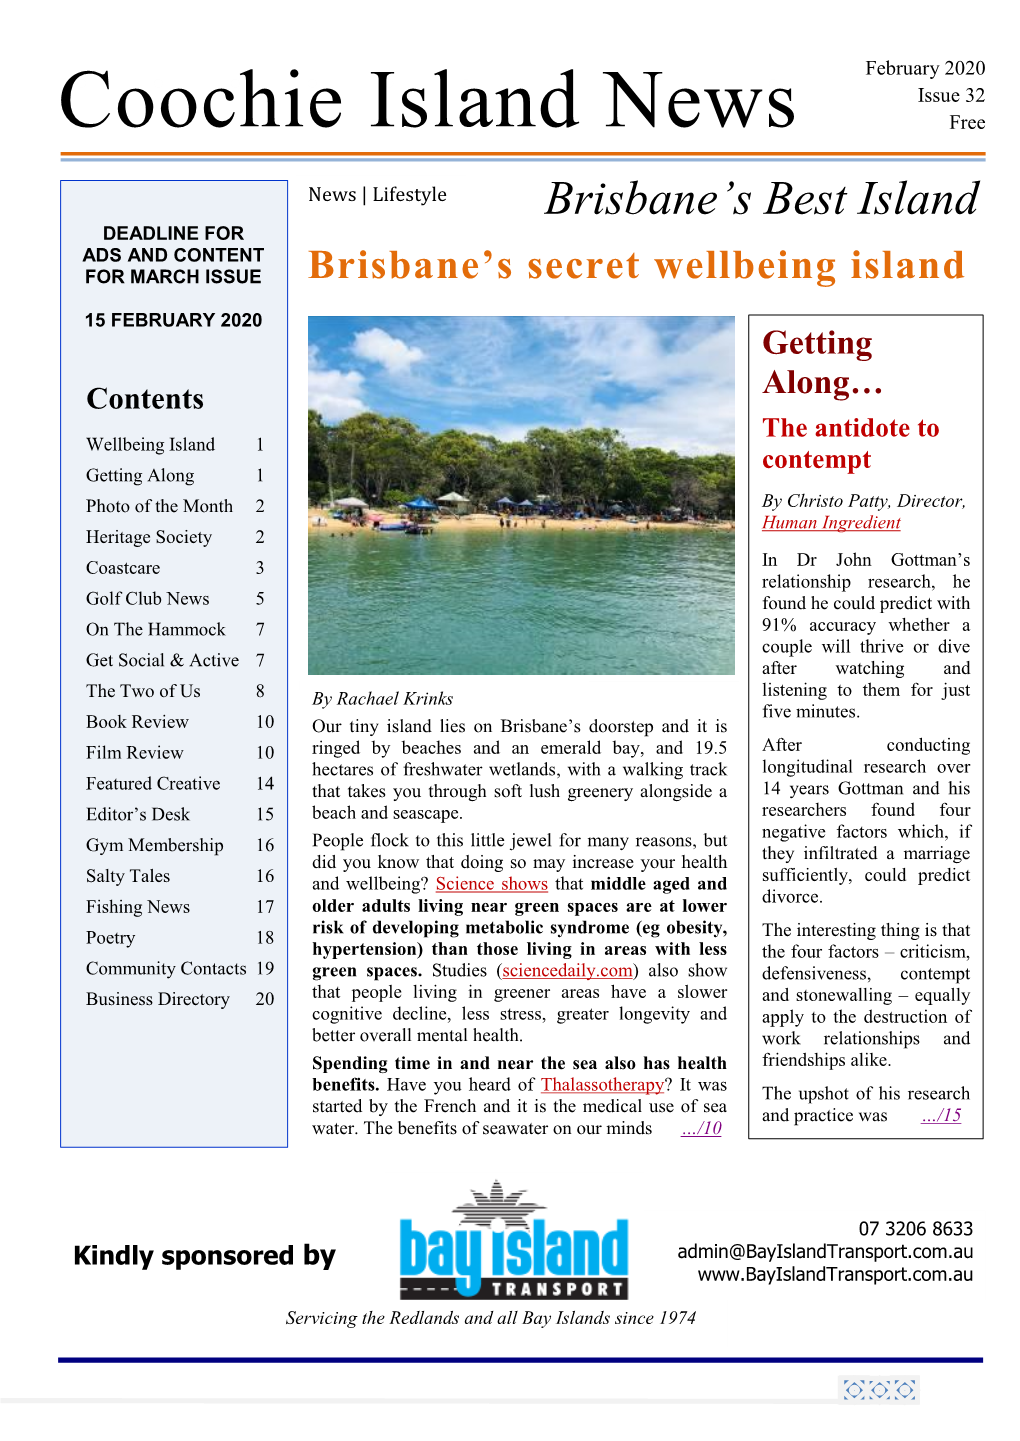 Coochie Island News Free